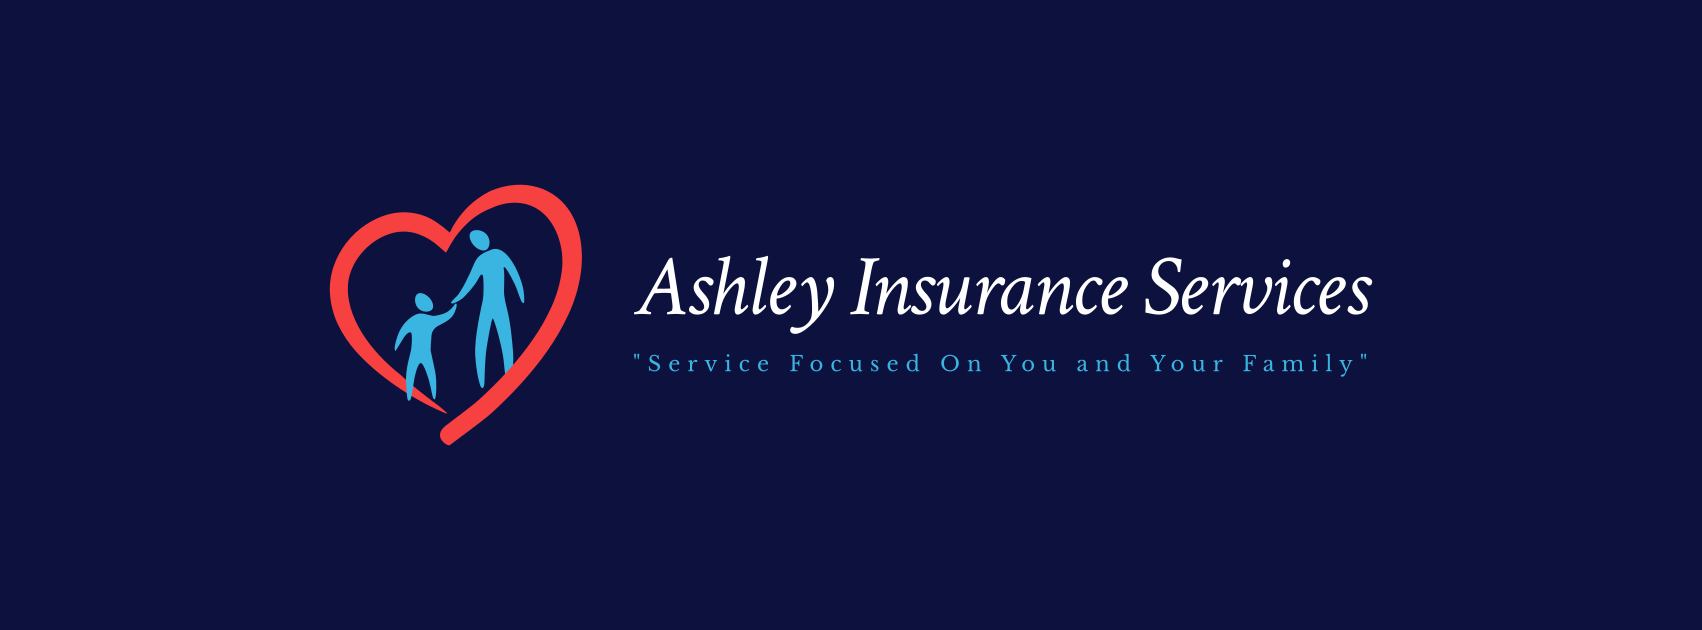 Ashley Insurance Services